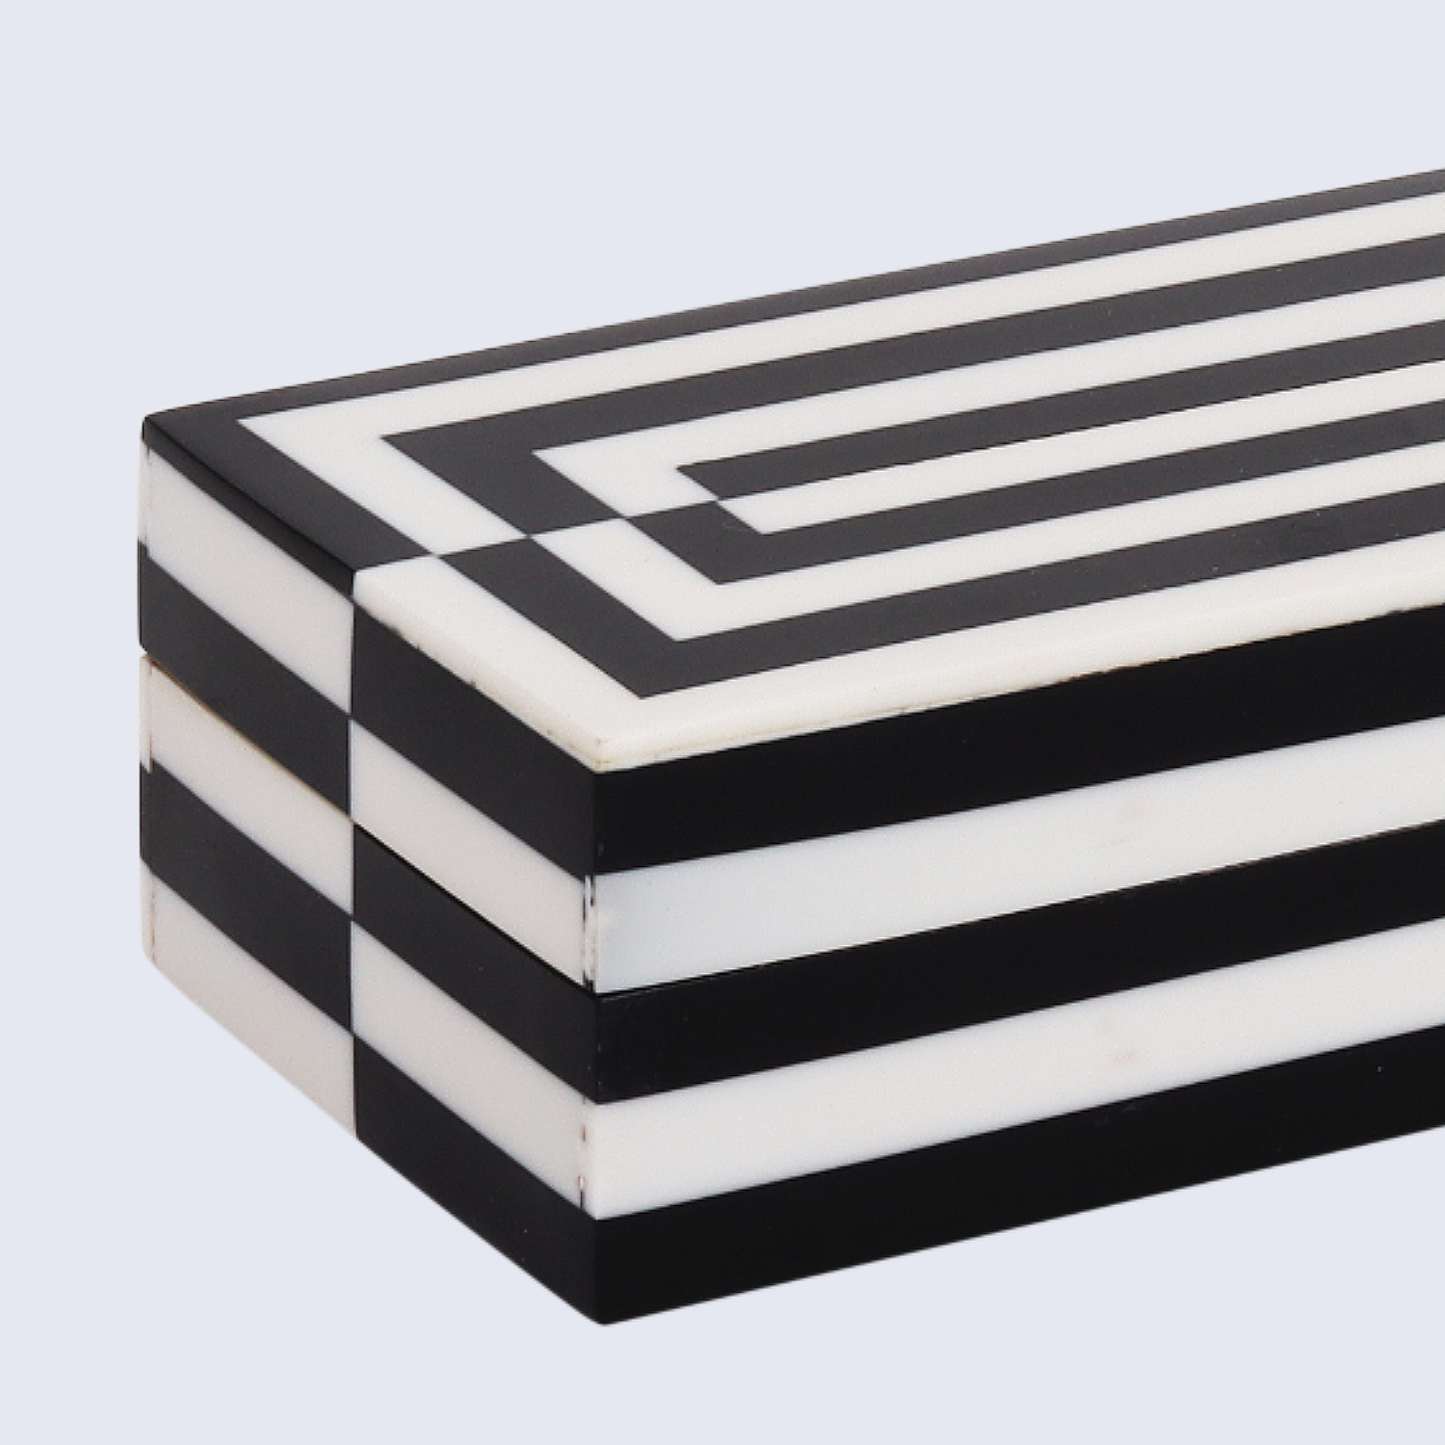 Decorative Boxes Puzzle Slide Black & White 8x6x1.5 Inch